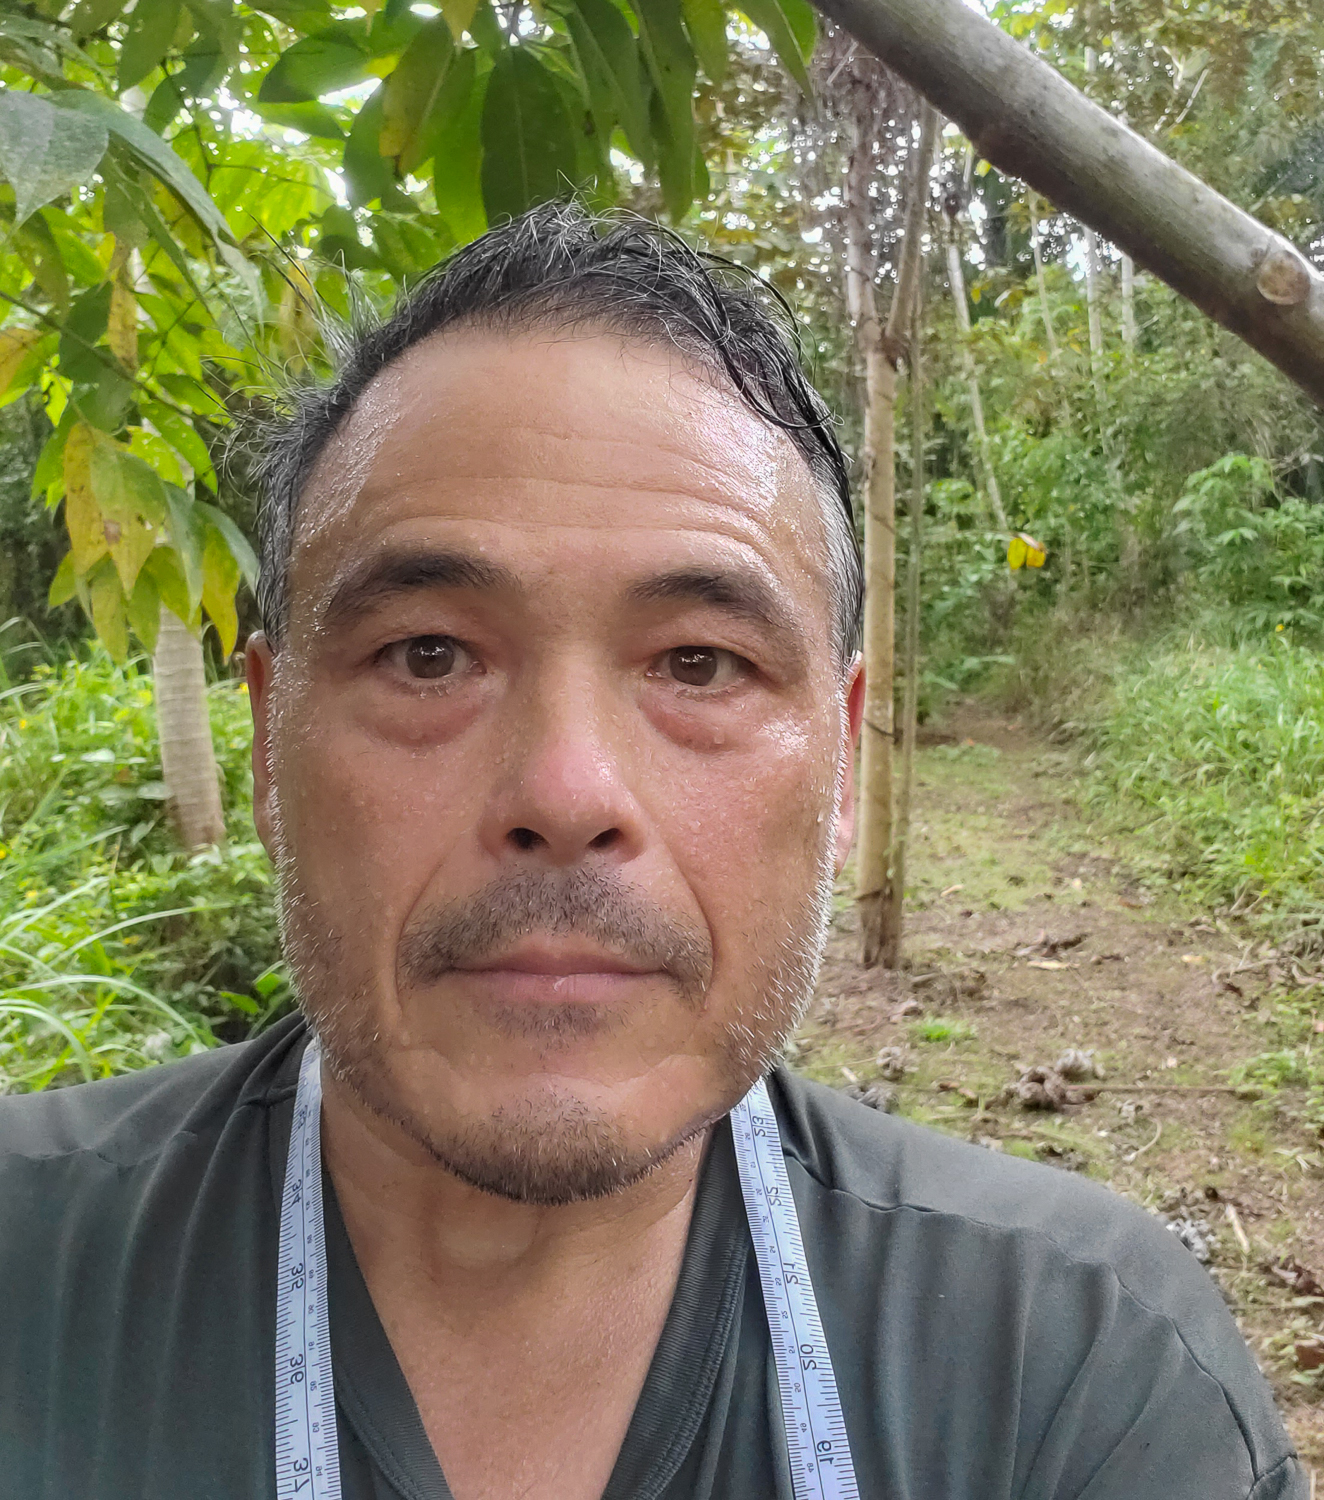 David Morimoto selfie in the forest of Costa Rica